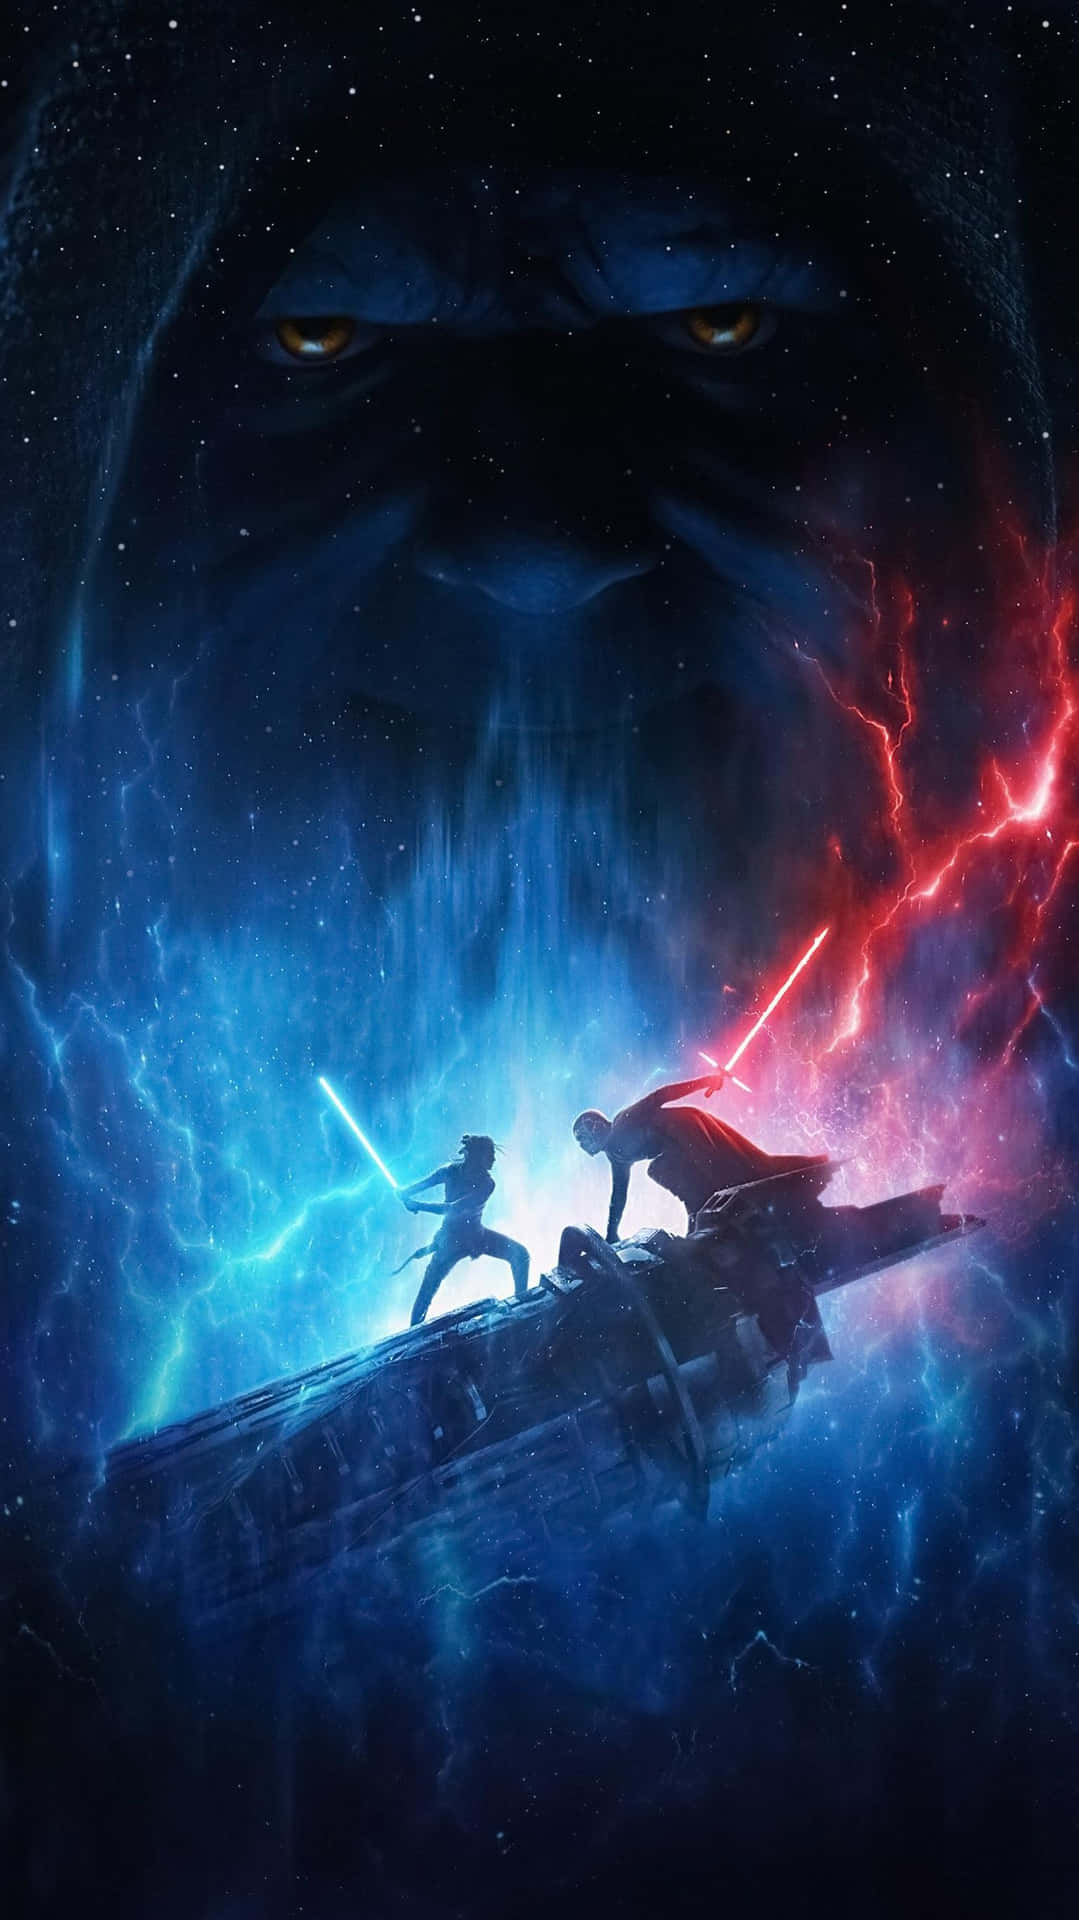 Epic Star Wars Duel Under Watchful Eyes Wallpaper